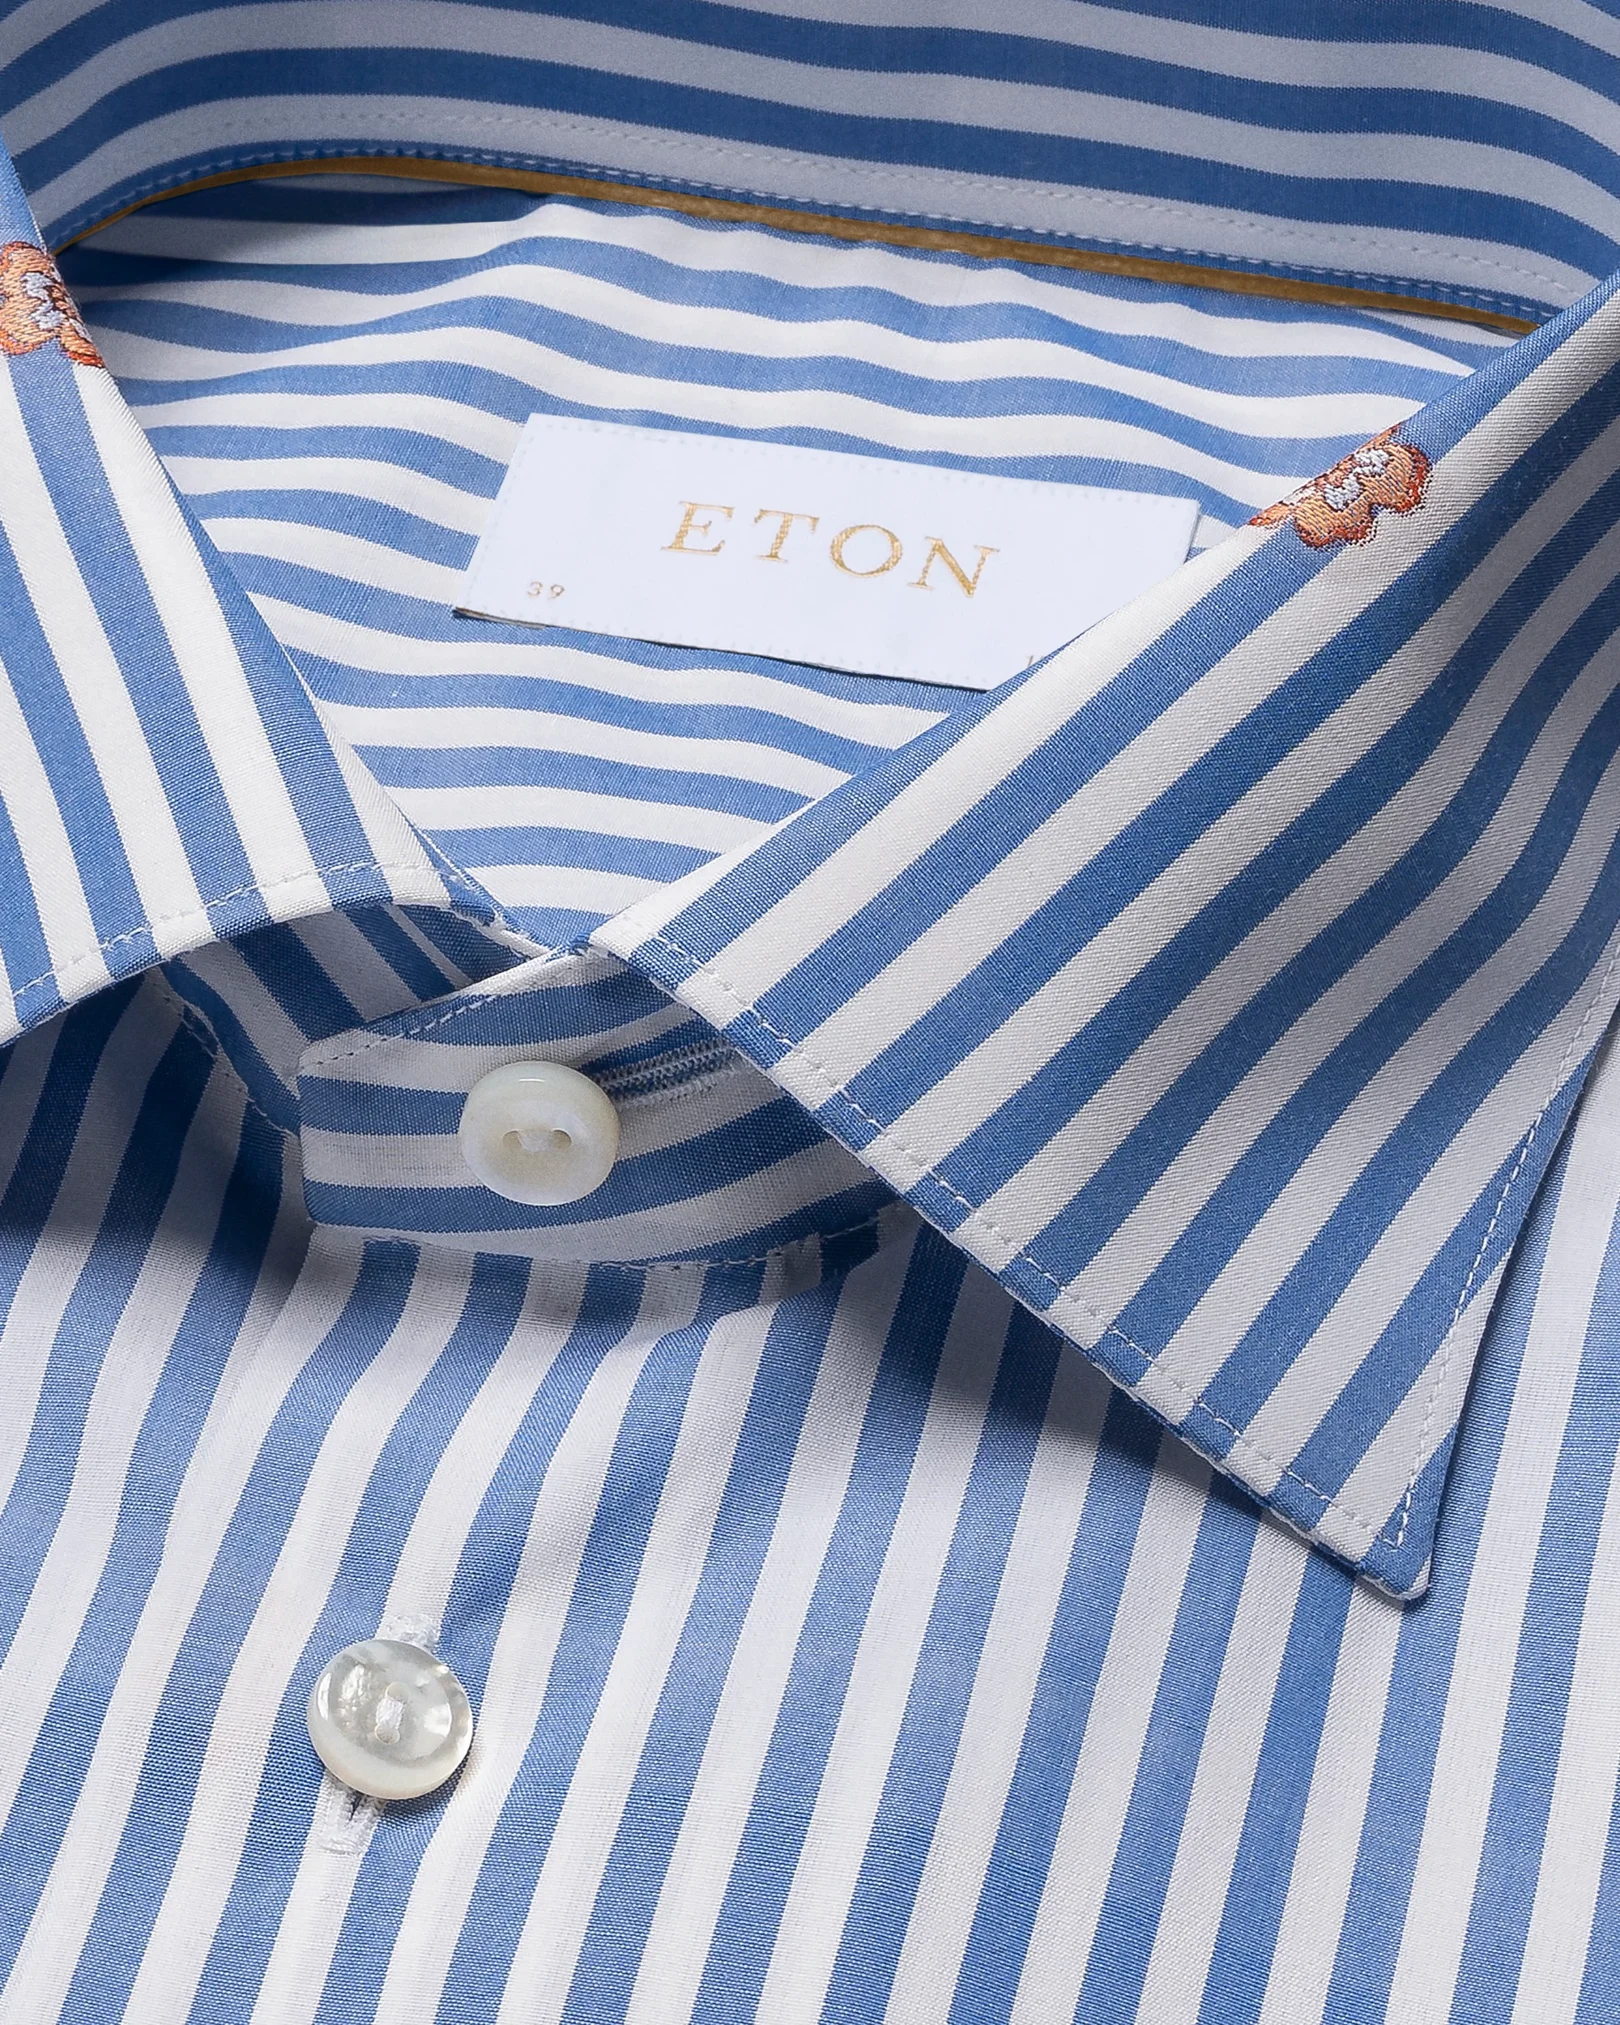 Eton - mid blue medallion striped shirt